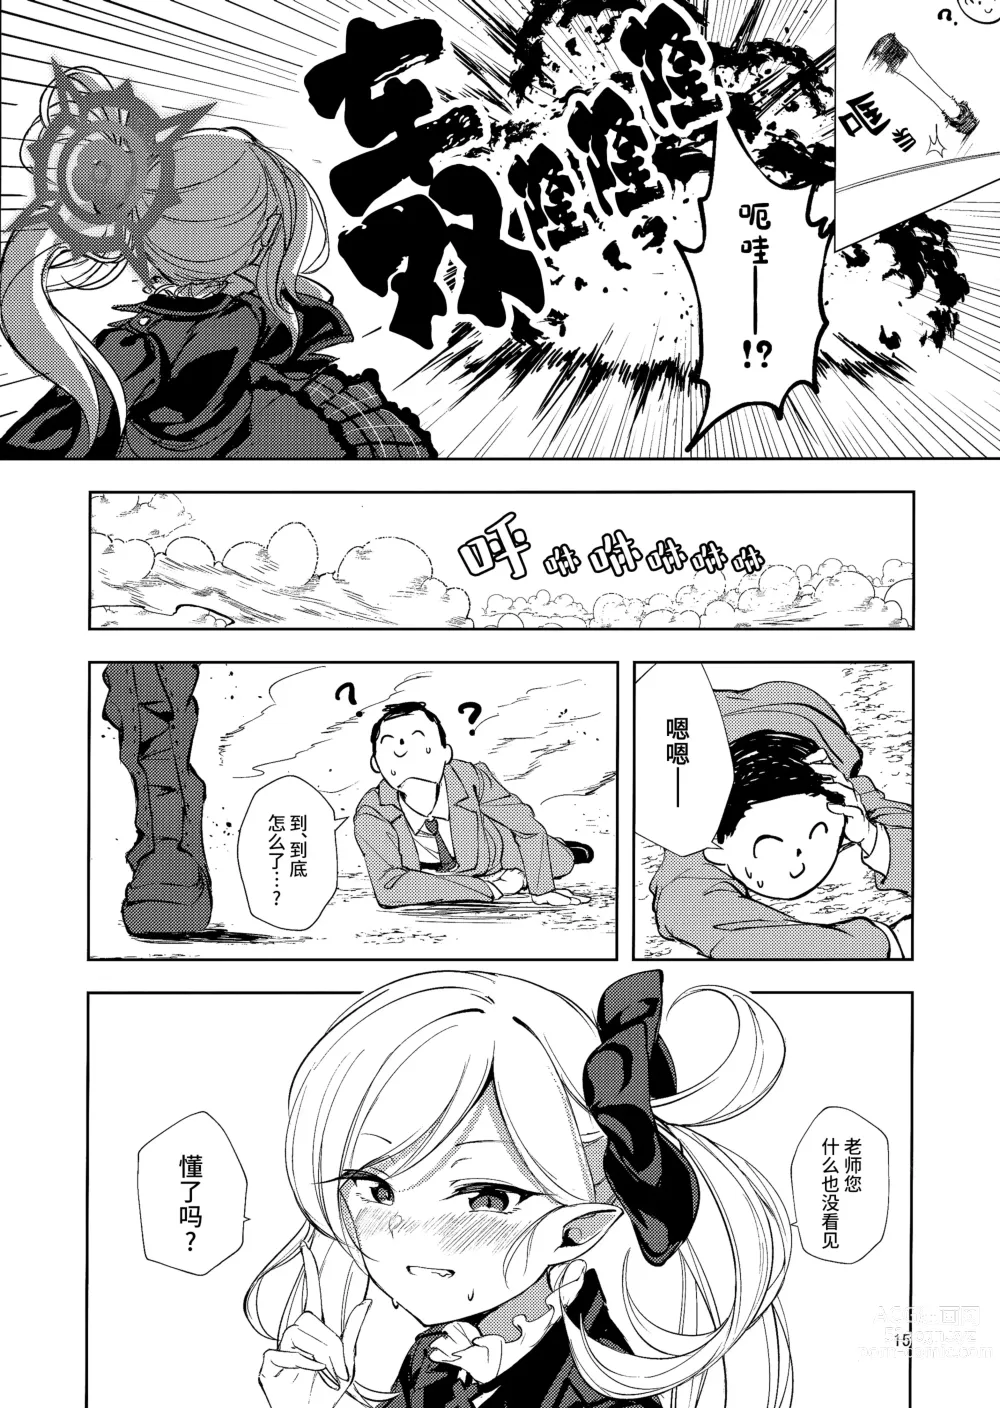 Page 16 of doujinshi 湿漉漉档案～便利屋68篇~